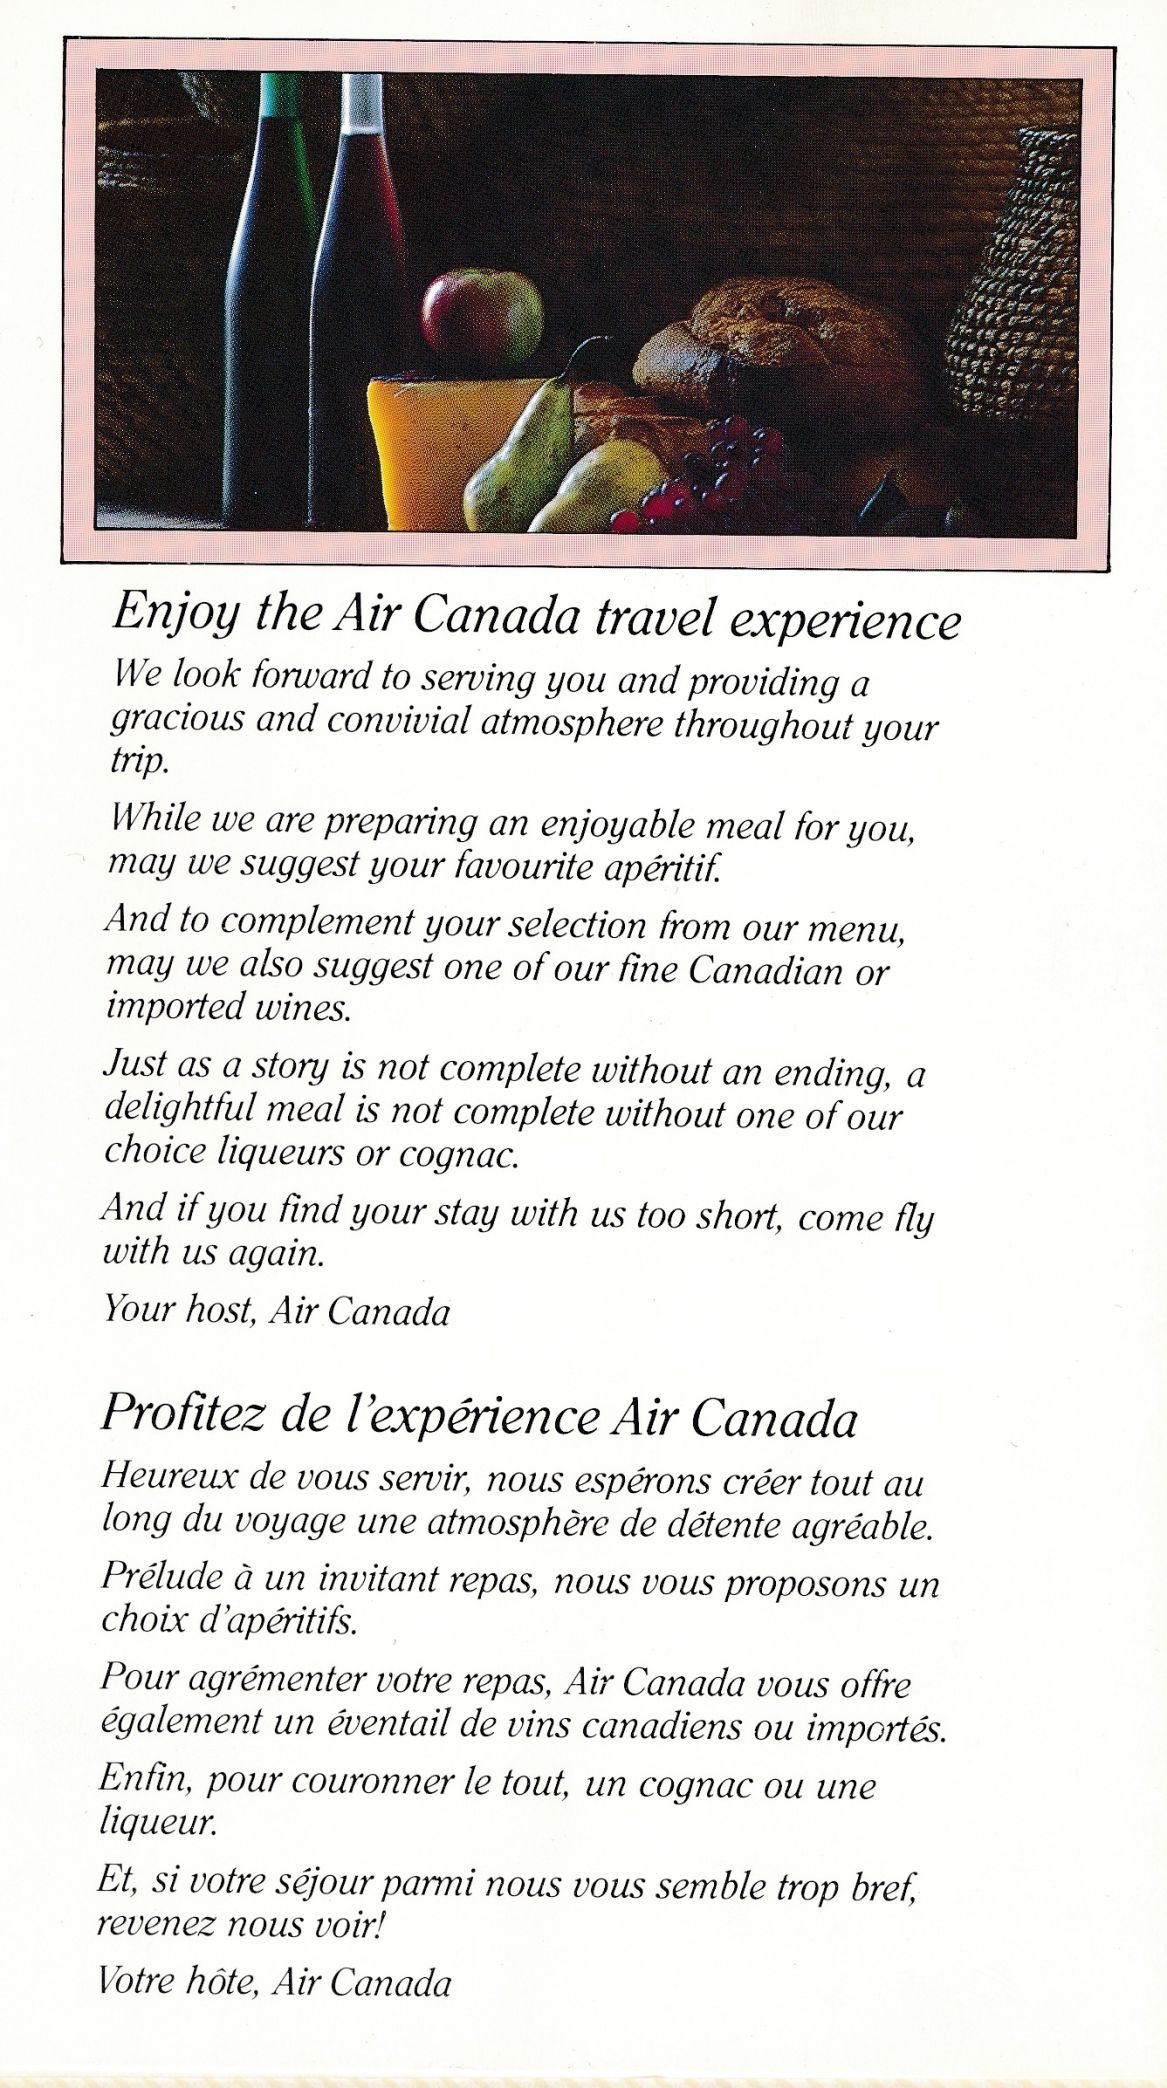 Menu classe Affaires Air Canada, [1989].